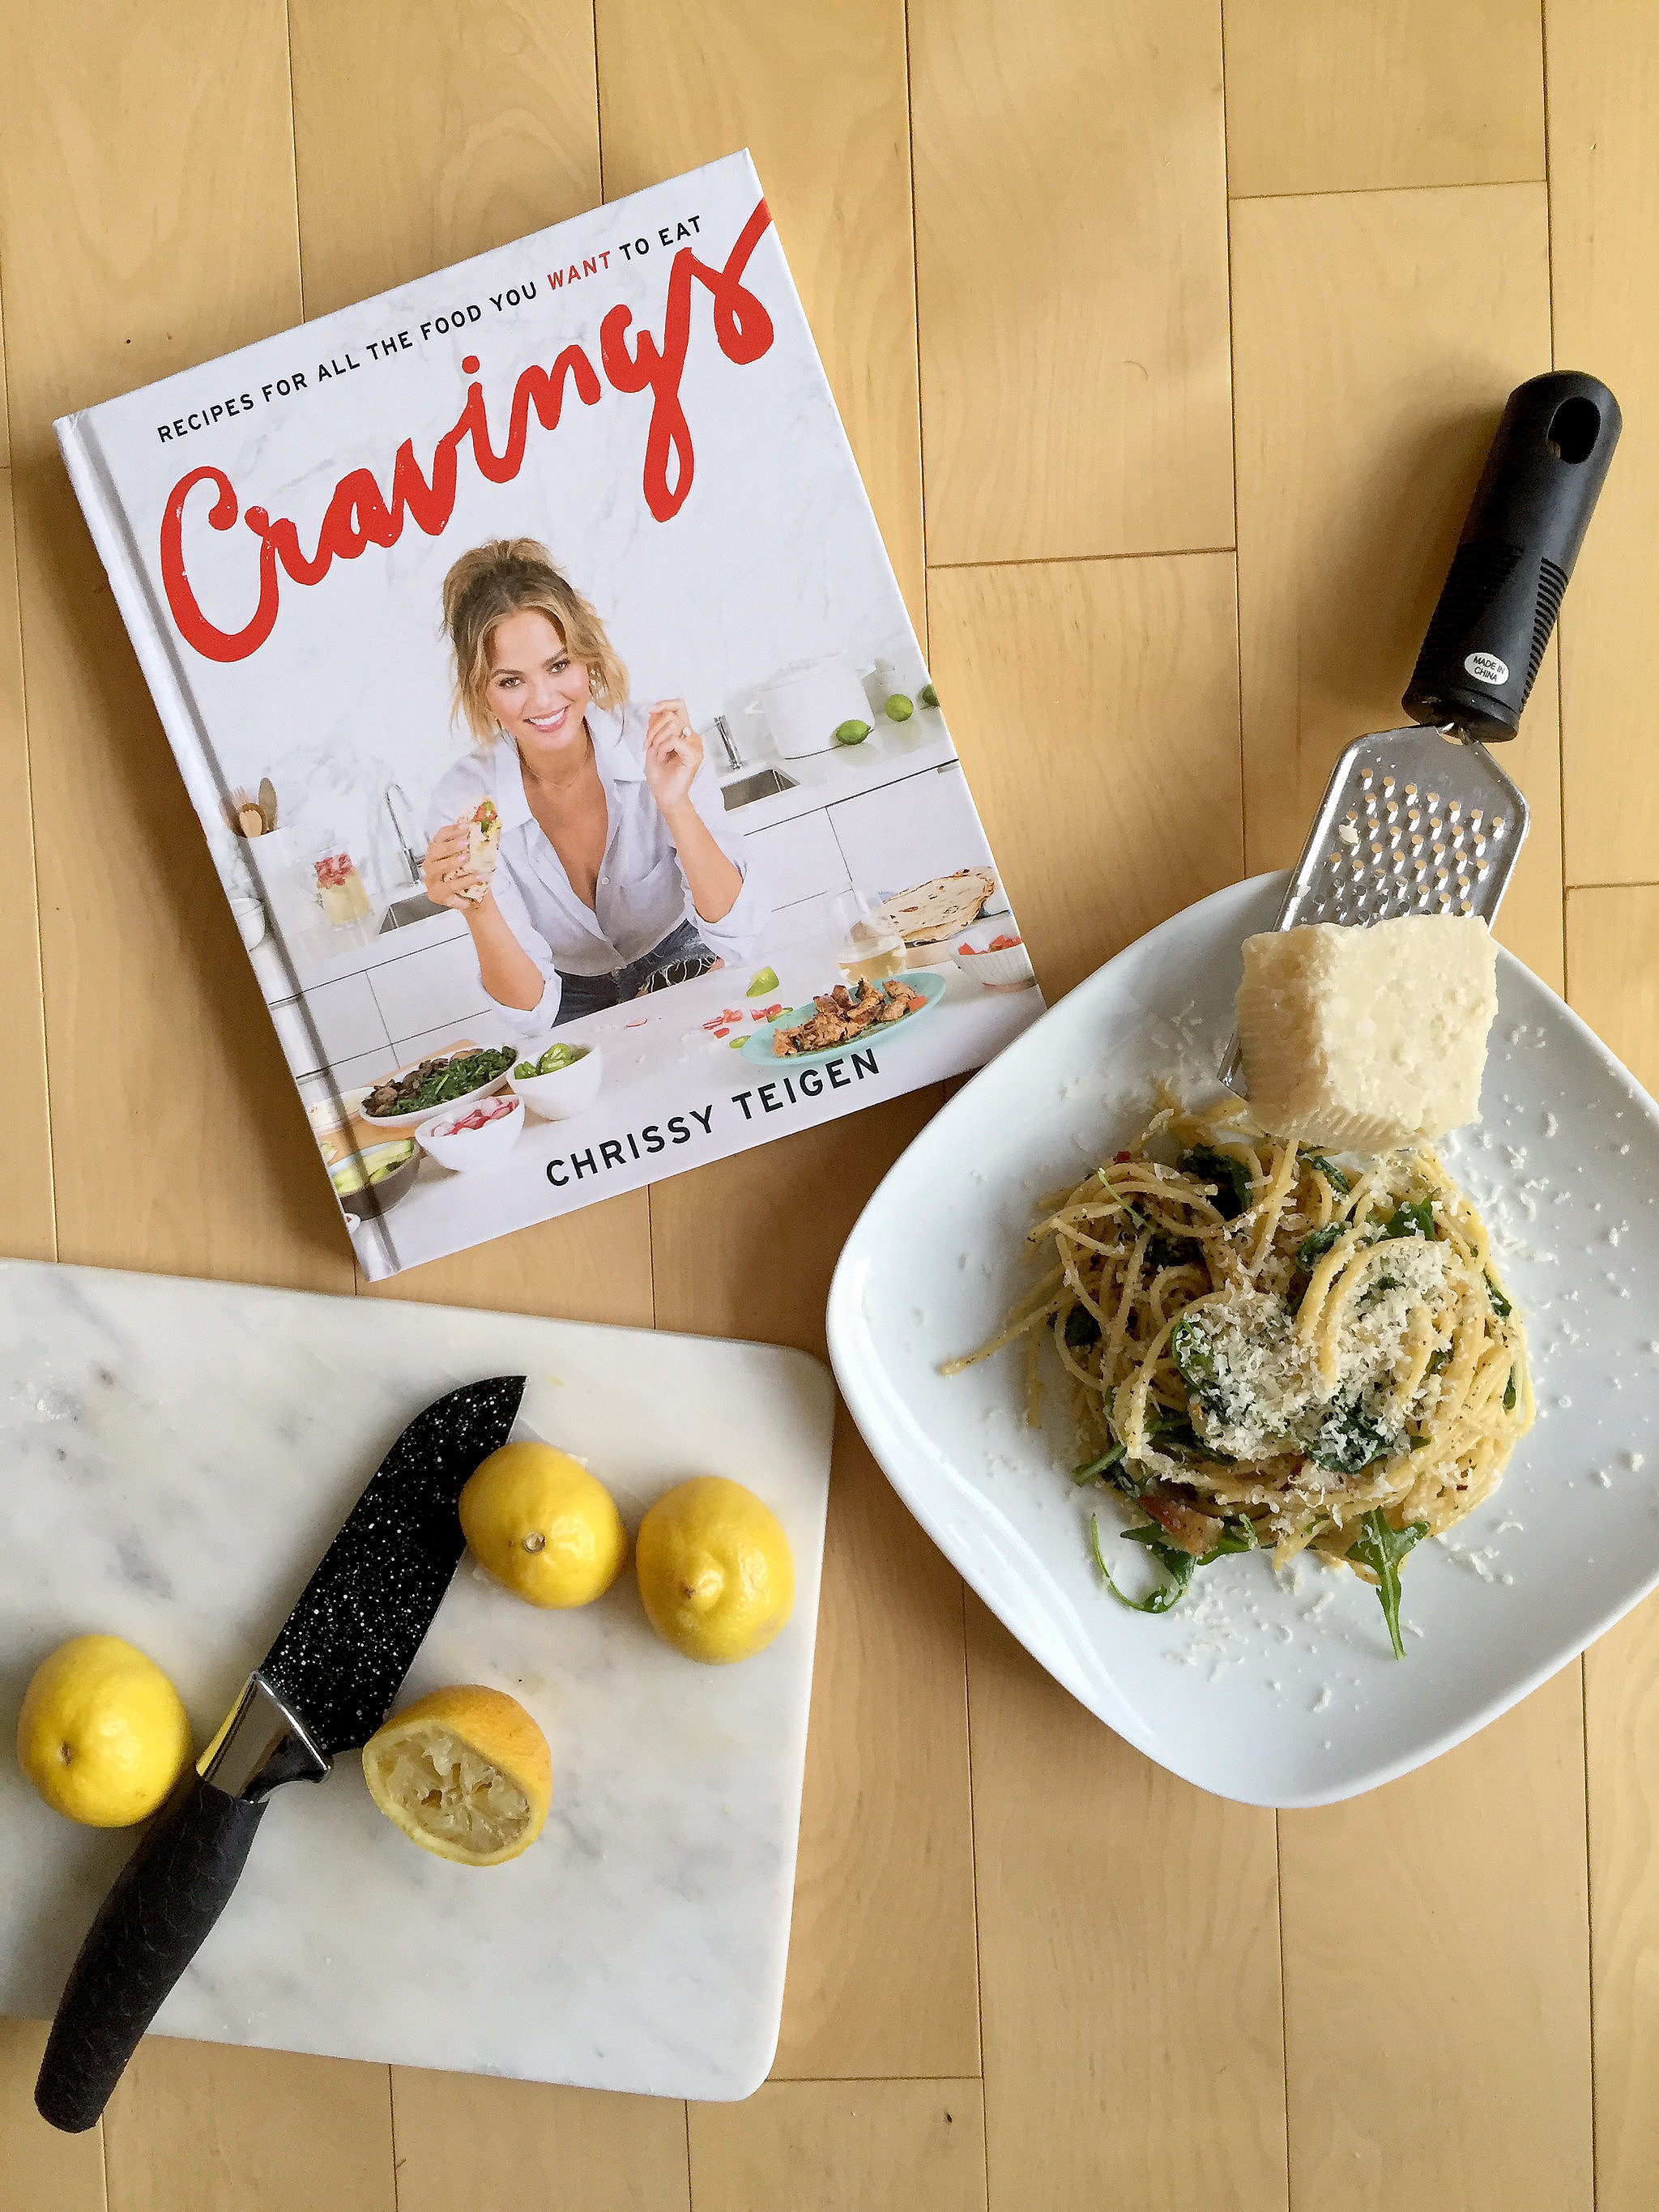 chrissy teigen's Cacio e Pepe recipe and Cravings cookbook